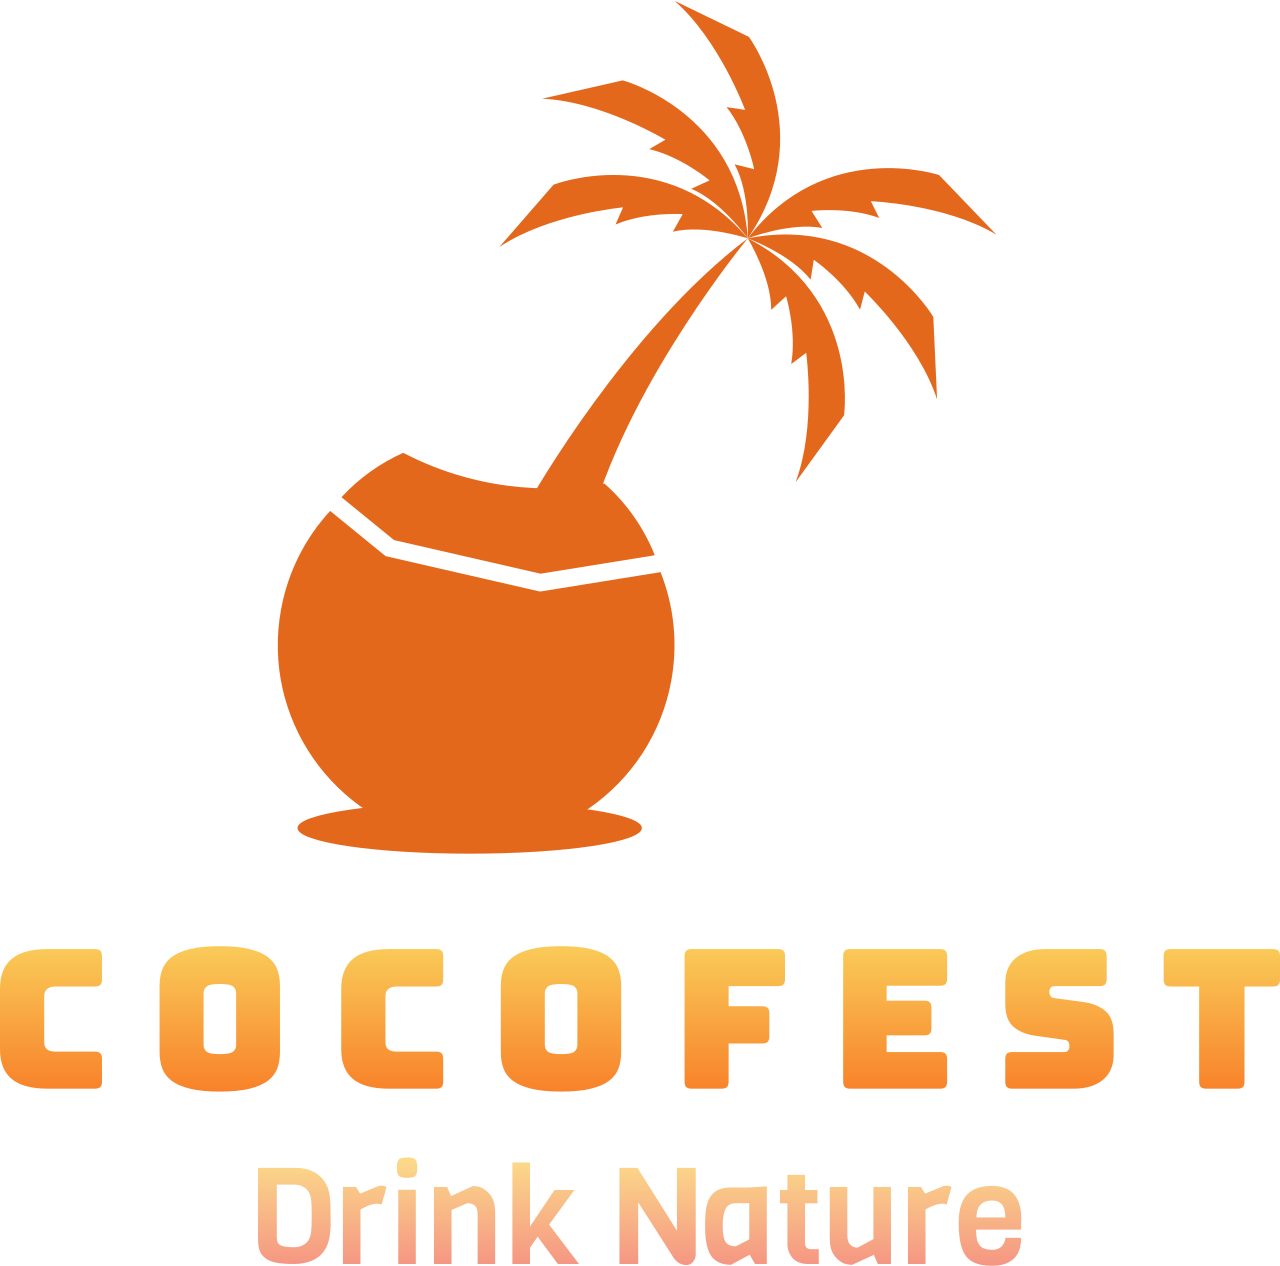 cocofest's logo